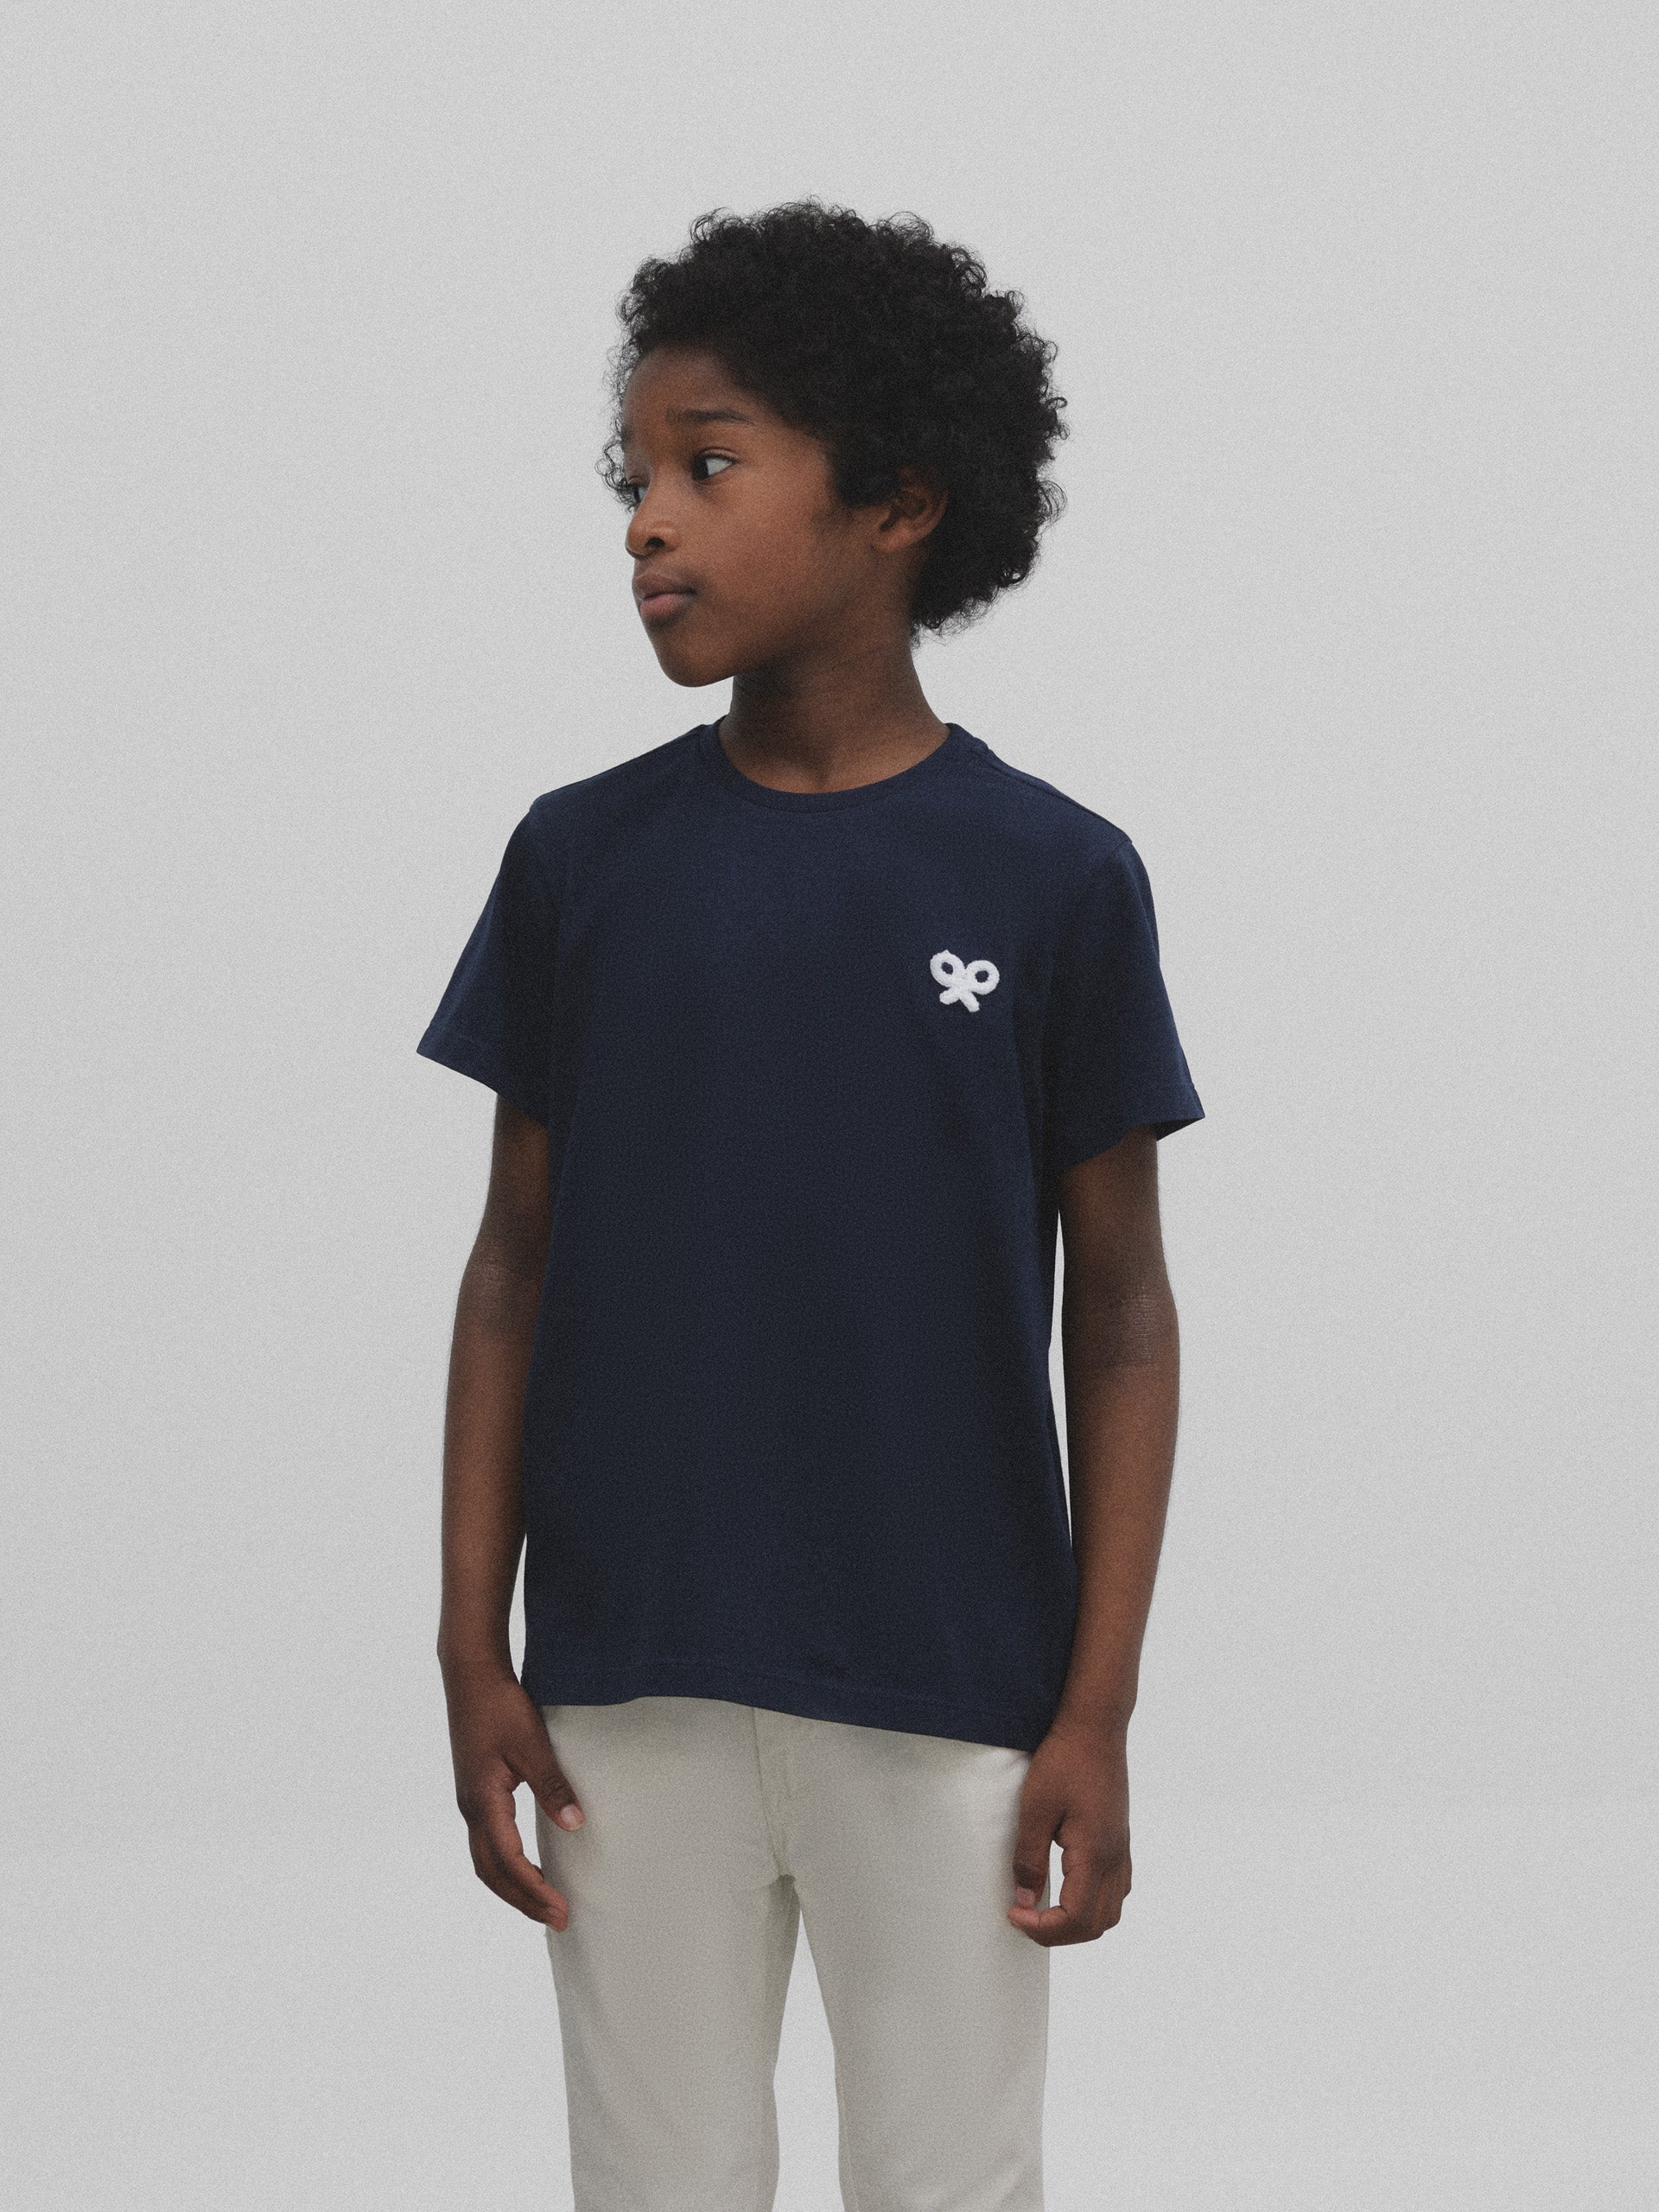 Camiseta kids silbon level azul marino